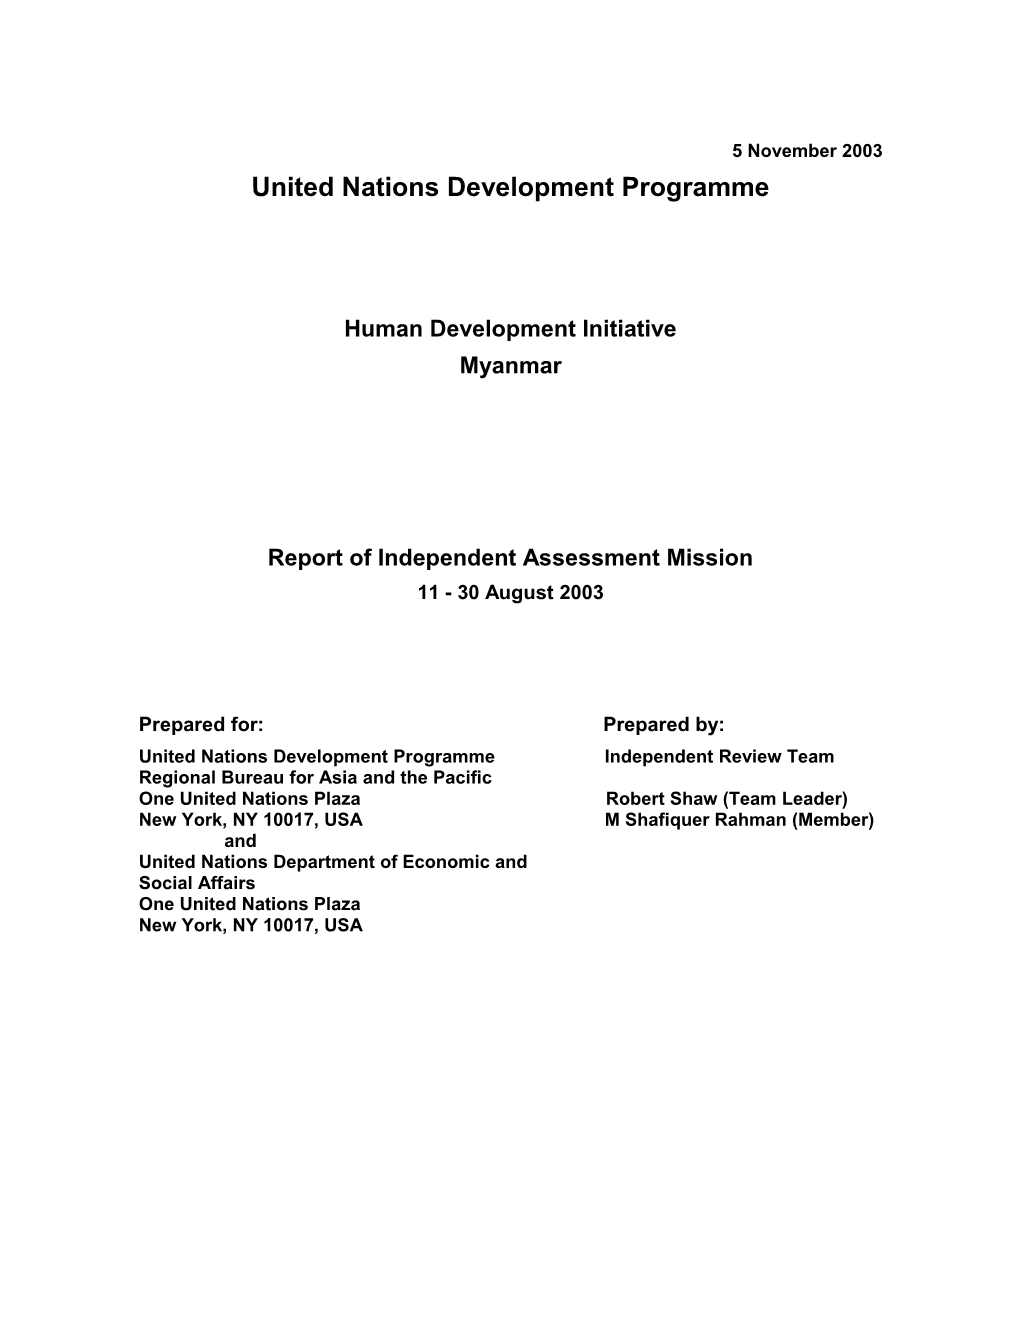 Human Development Initiative - Myanmar Page 1